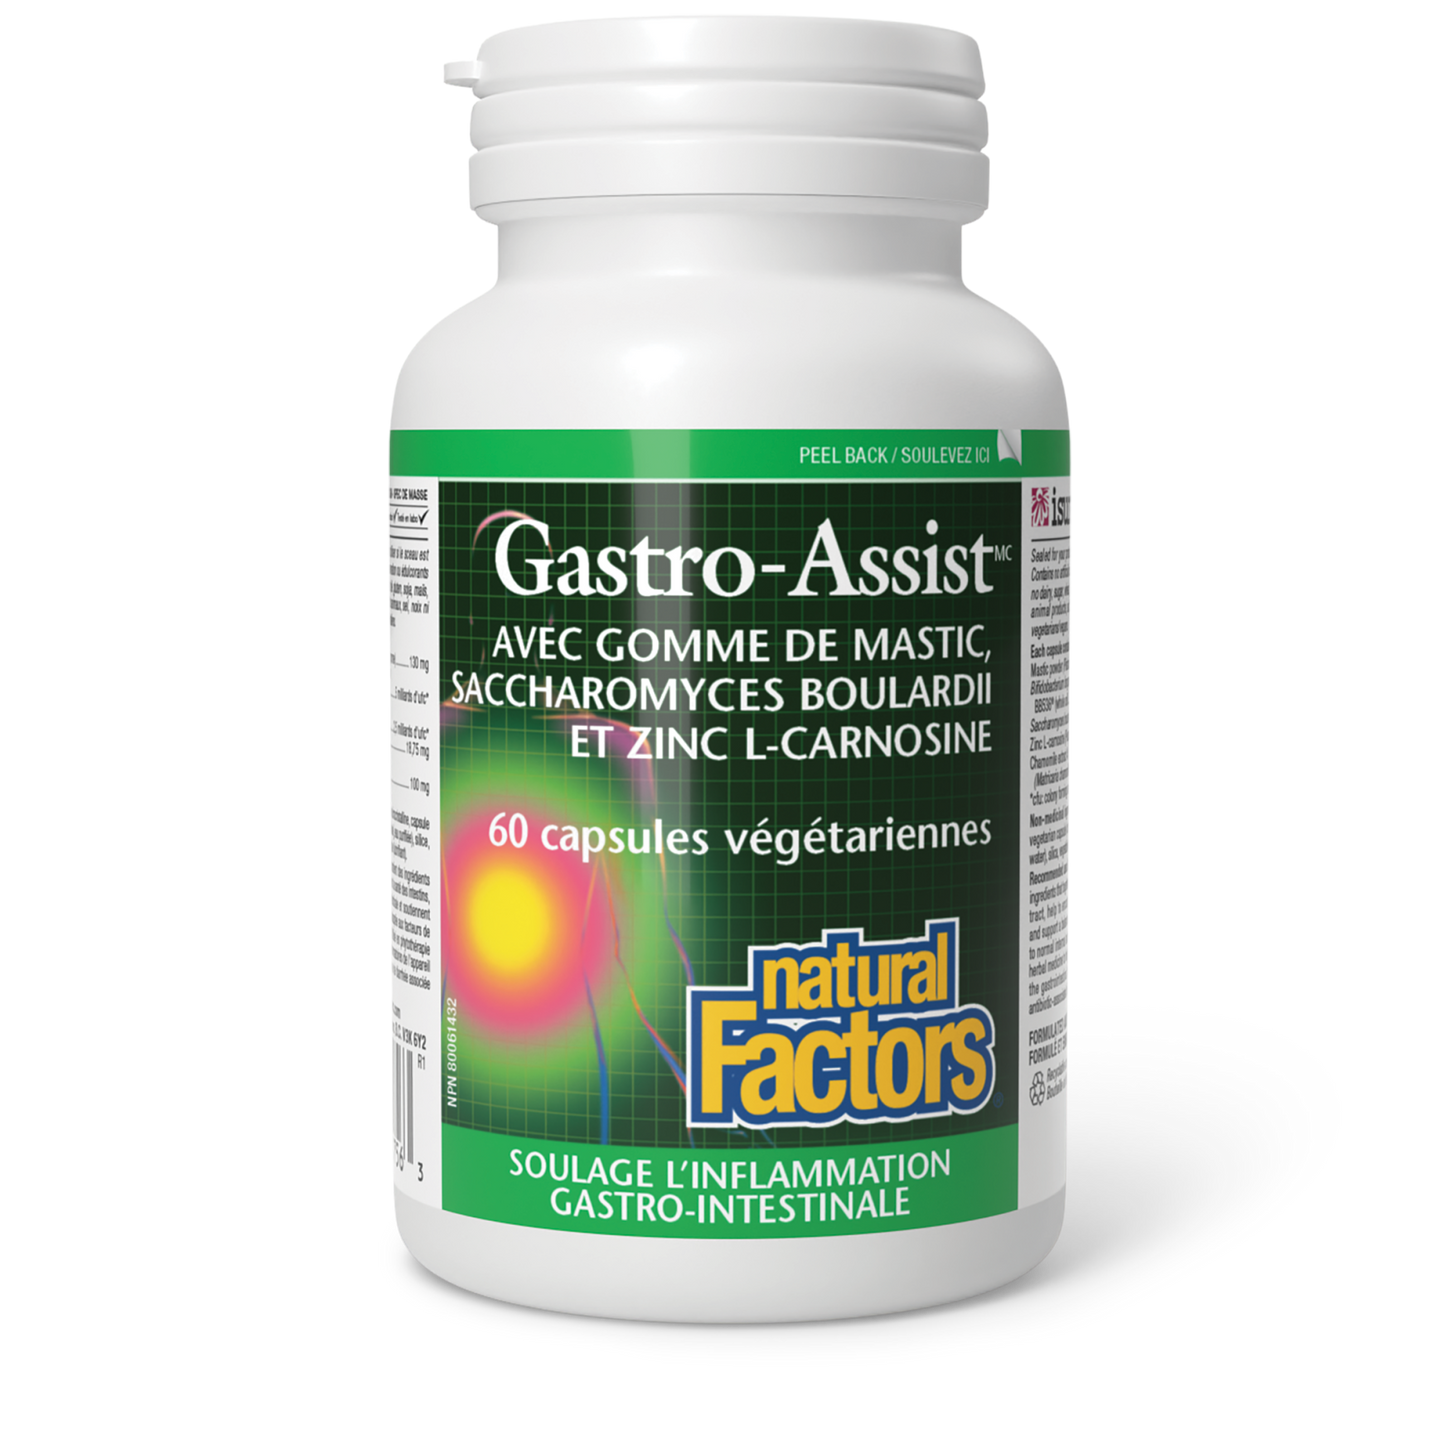 Gastro-Assist, Natural Factors|v|image|1756